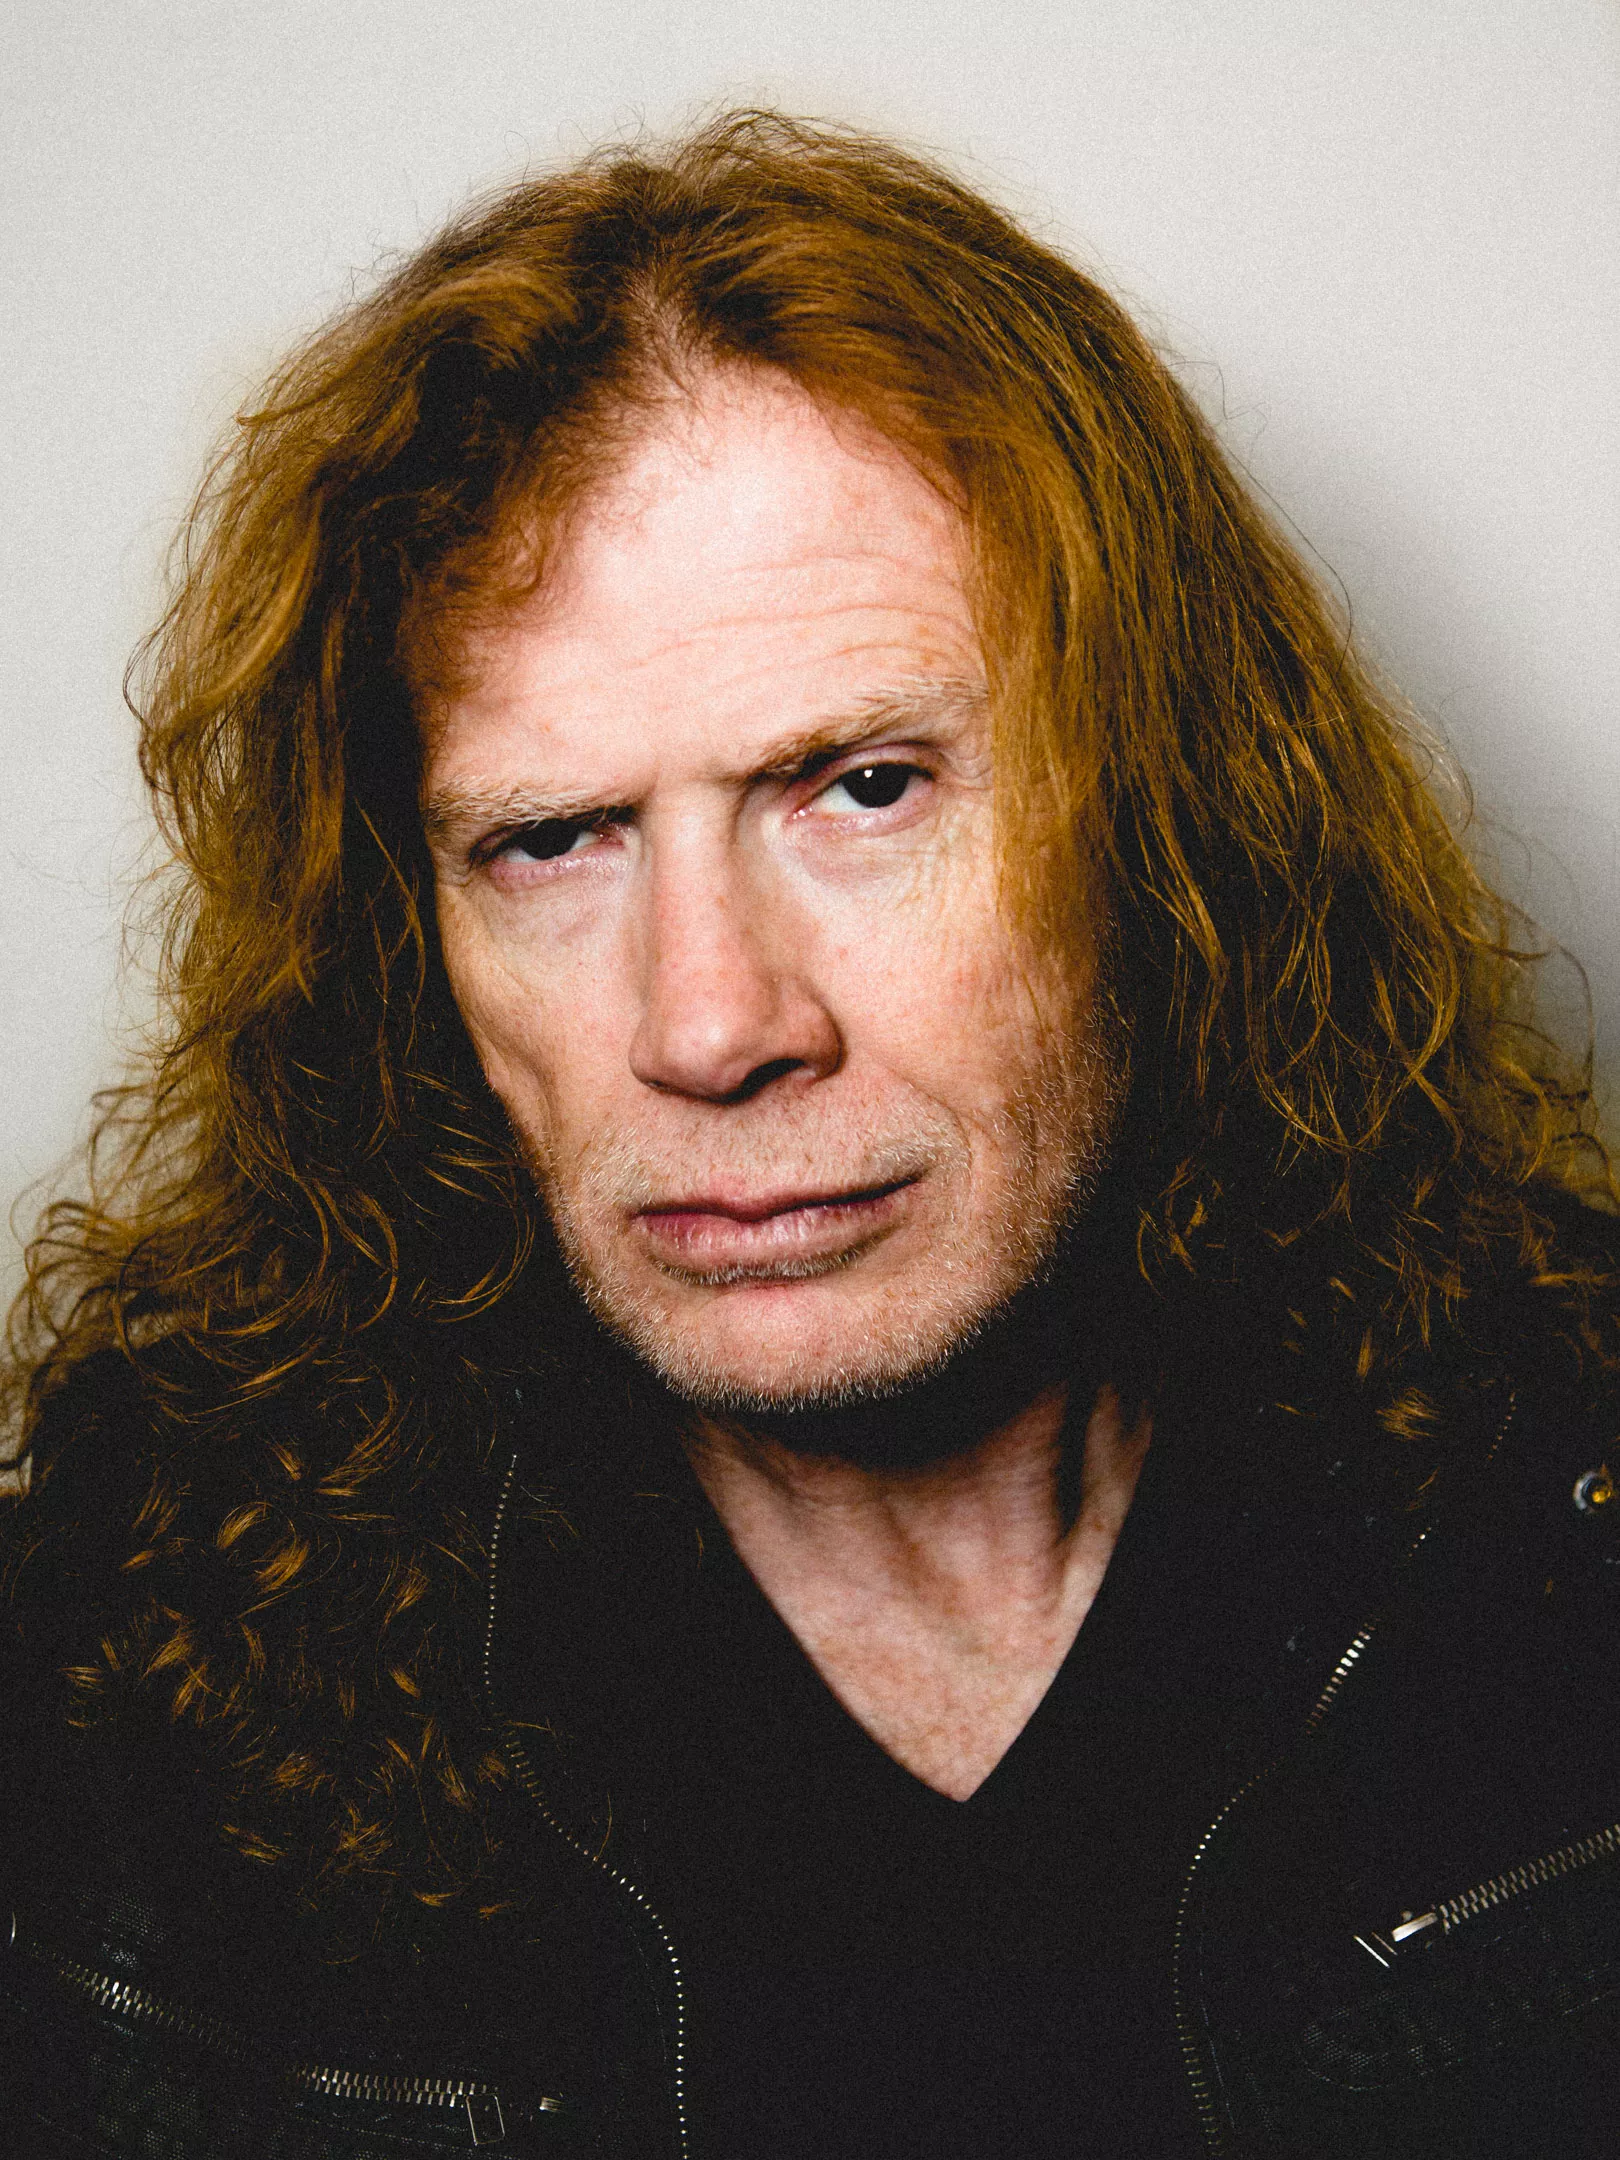 Megadeths frontman Dave Mustaine